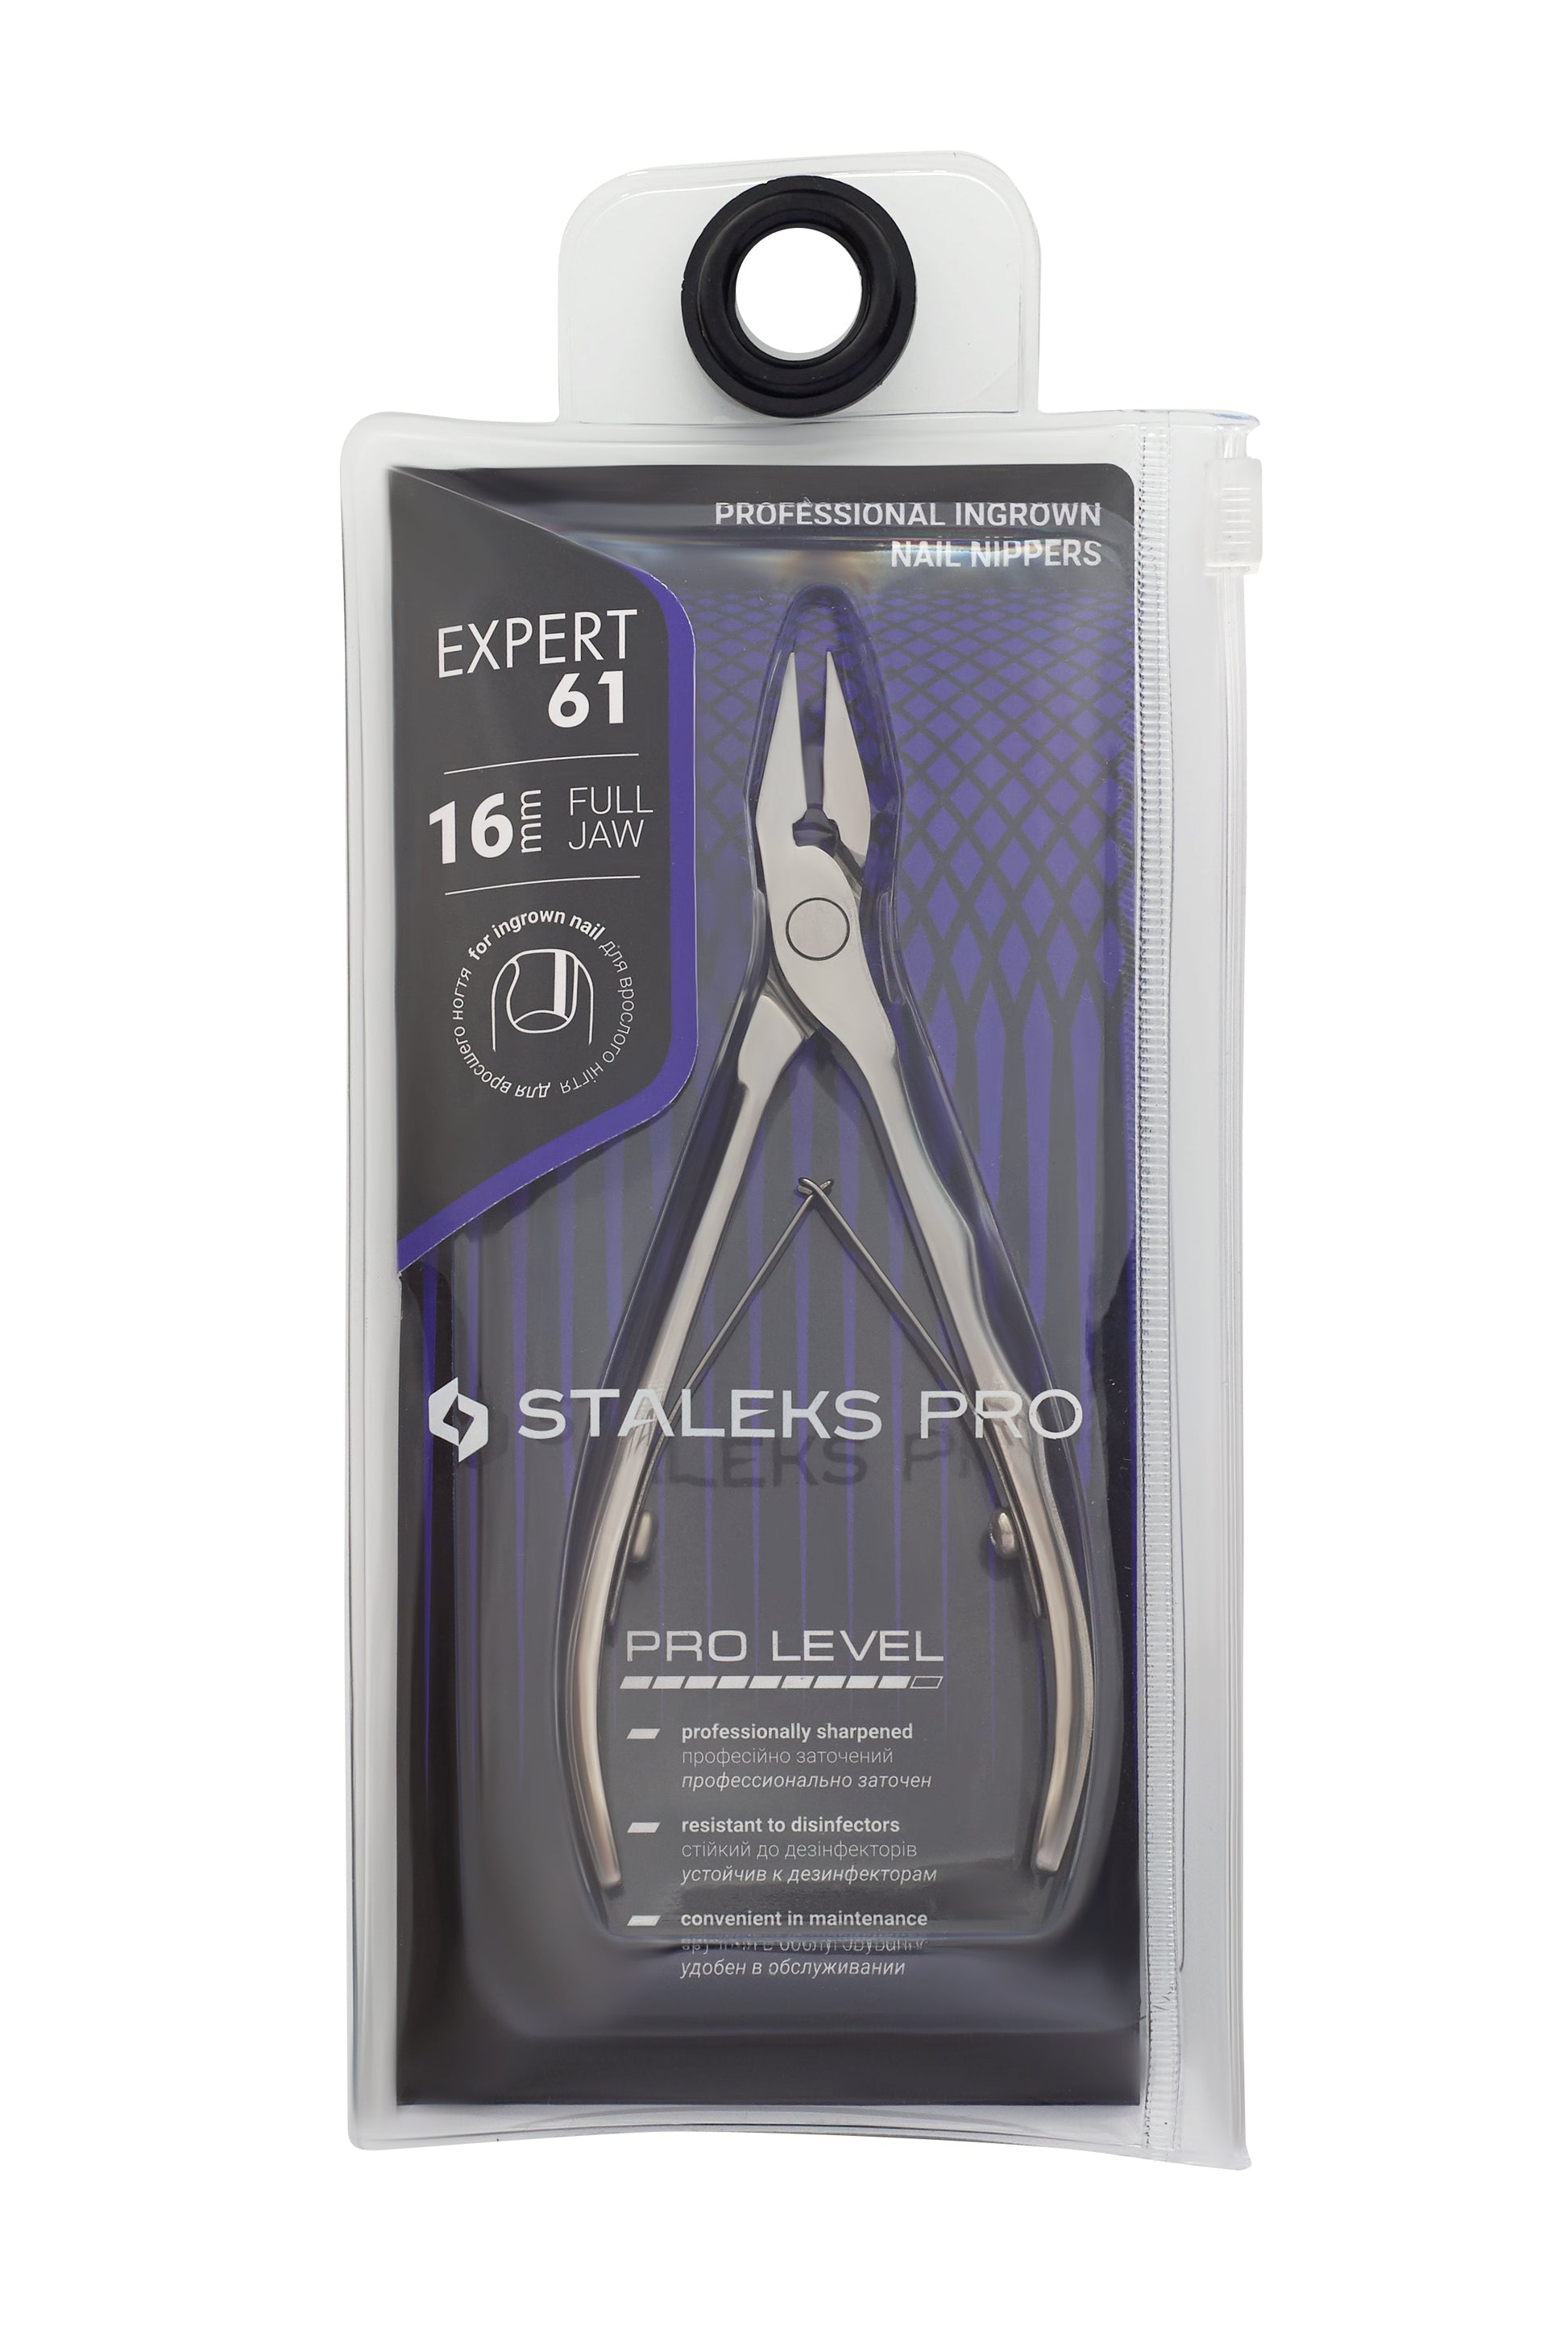 STALEKS-Ingrown nail nippers EXPERT 61 16mm Professional-5